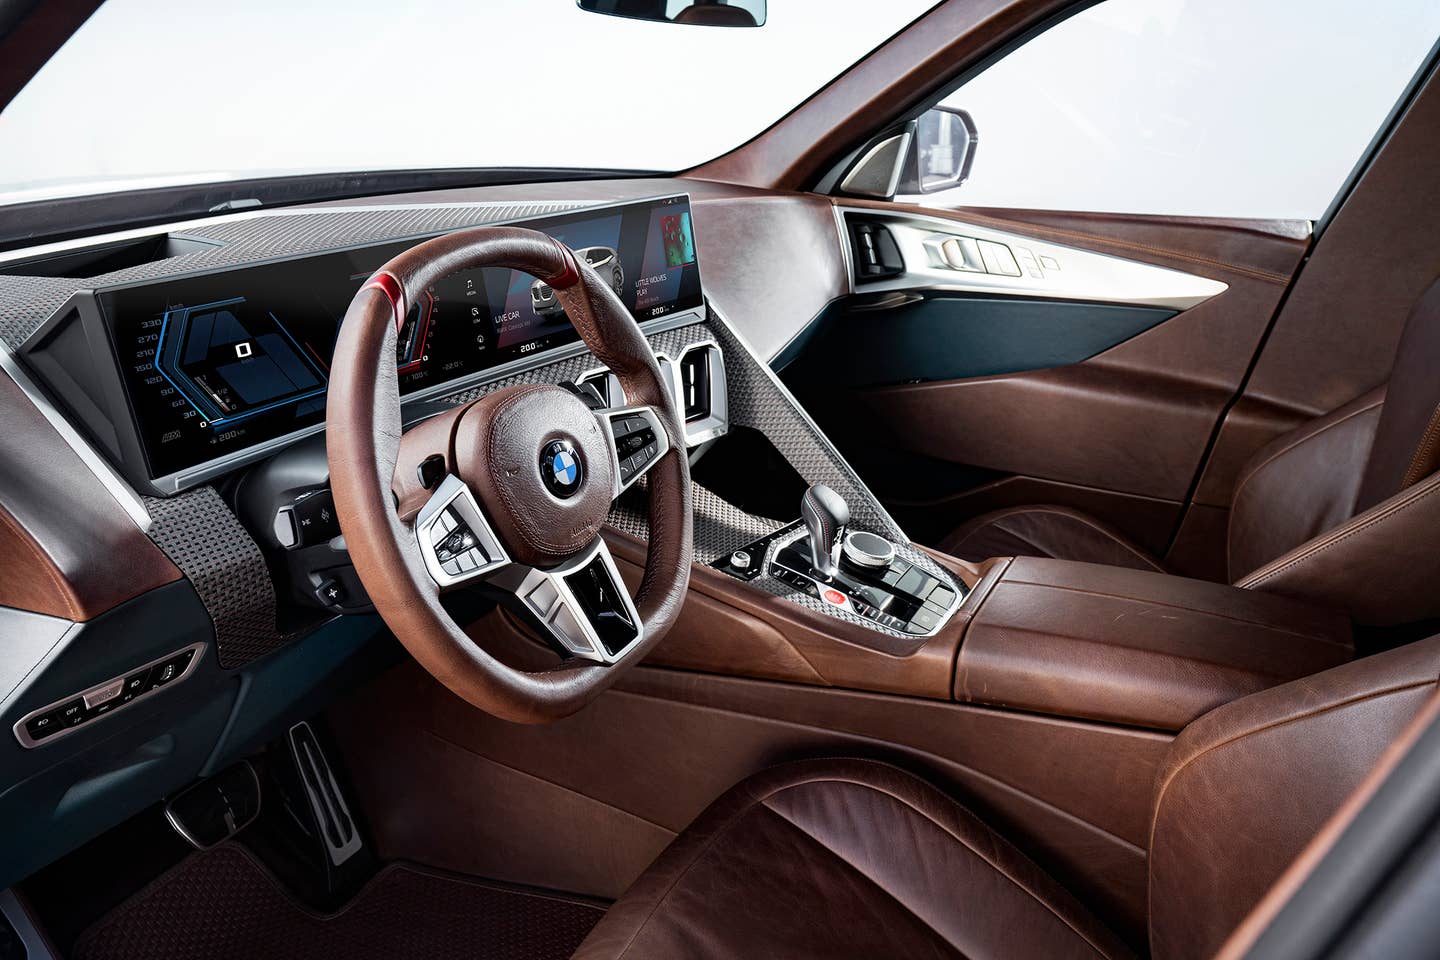 The BMW XM concept.